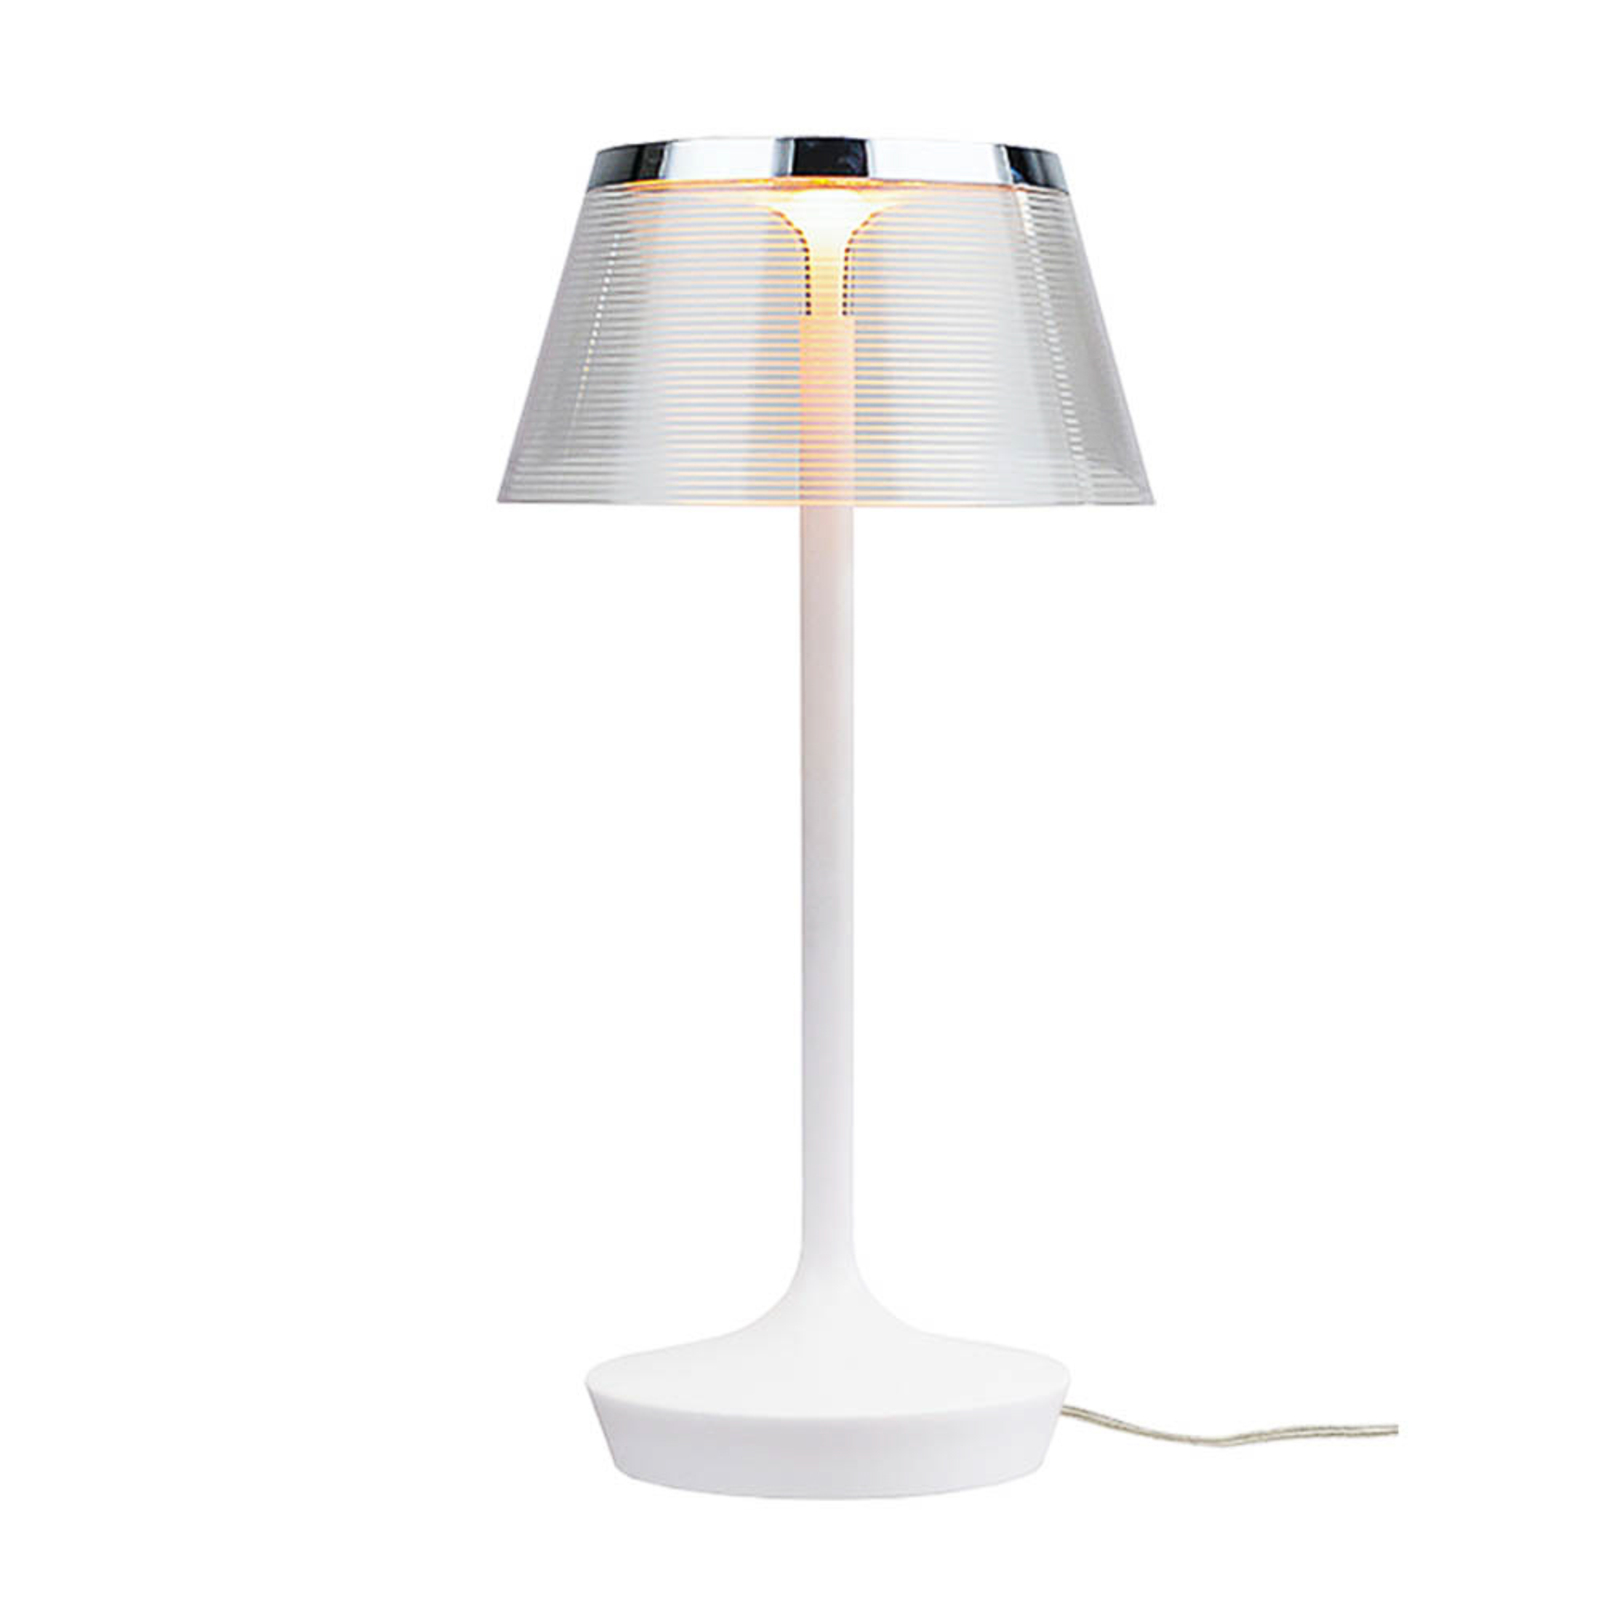 Aluminor La Petite Lampe lampe à poser LED blanche